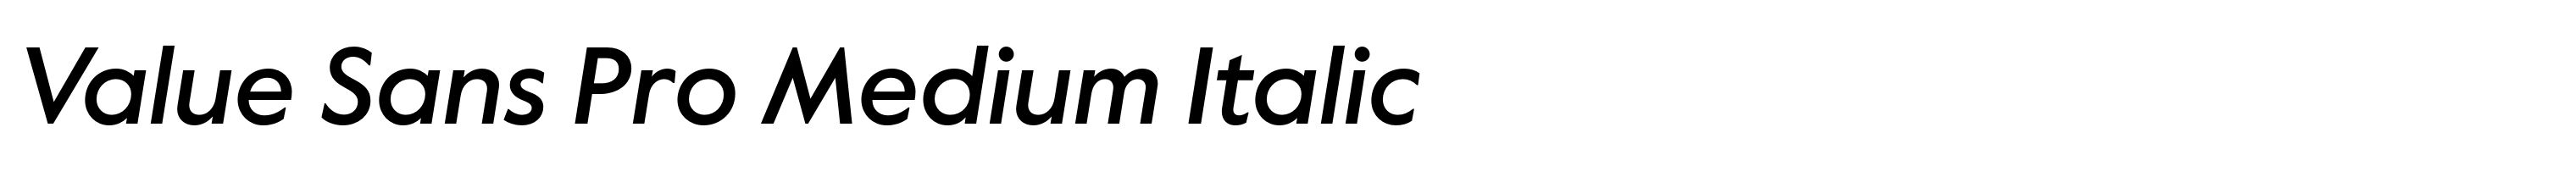 Value Sans Pro Medium Italic